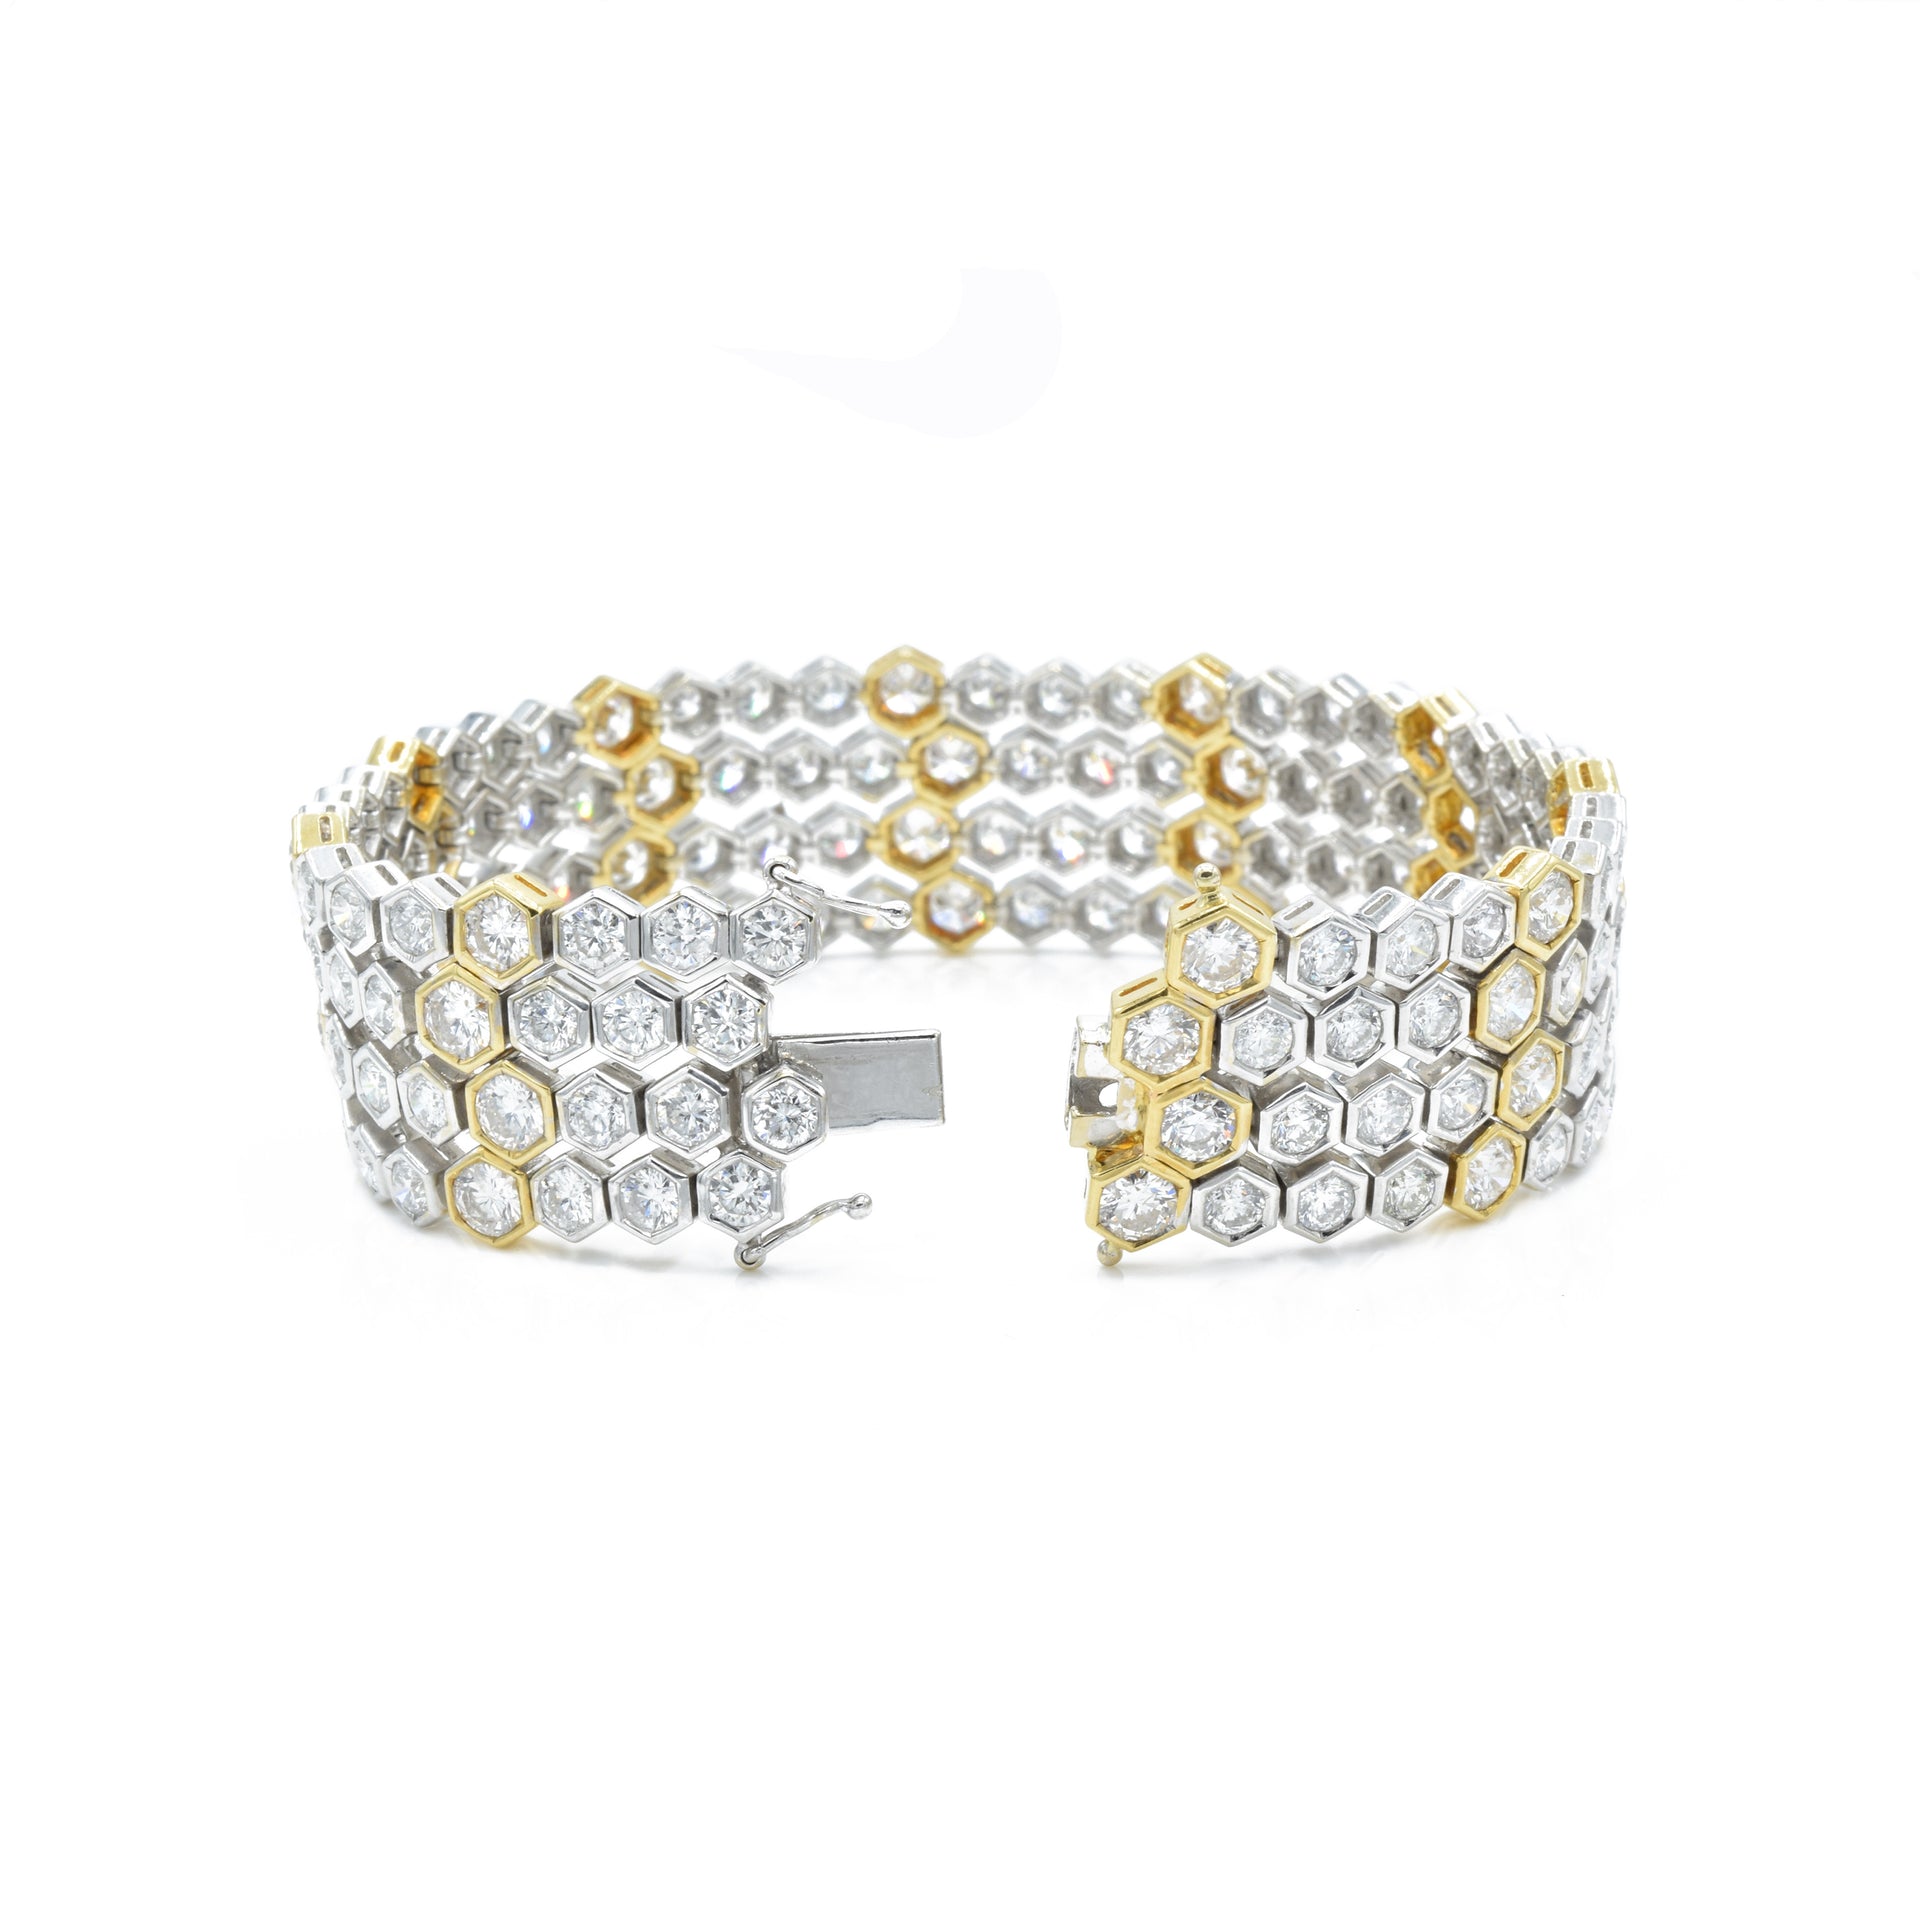 18kt Yellow and White Gold Diamond Bracelet